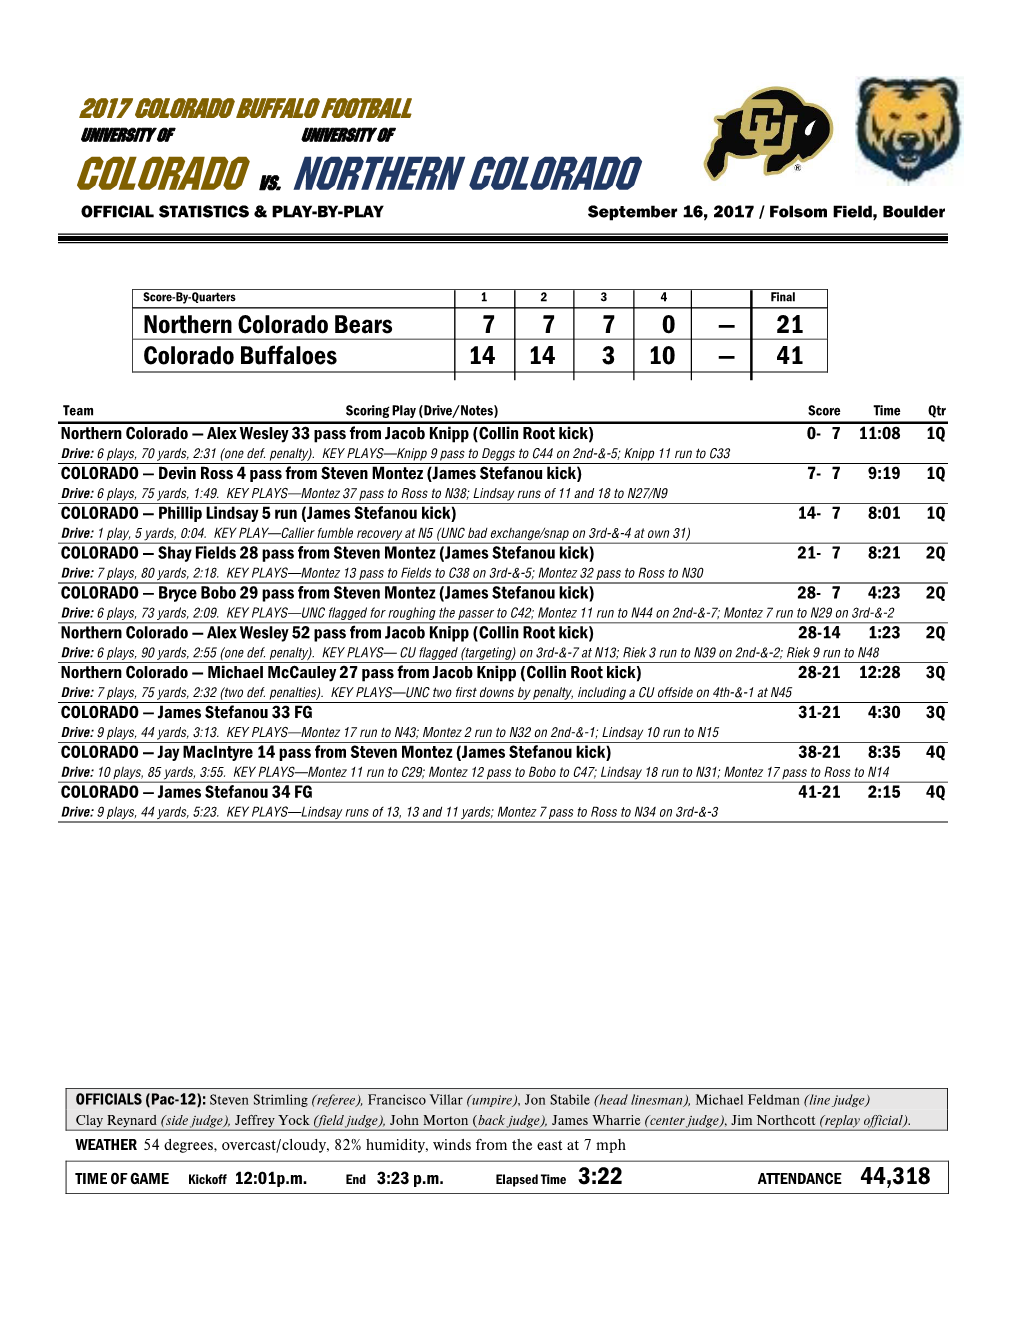 COLORADO Vs. NORTHERN COLORADO OFFICIAL STATISTICS & PLAY-BY-PLAY September 16, 2017 / Folsom Field, Boulder